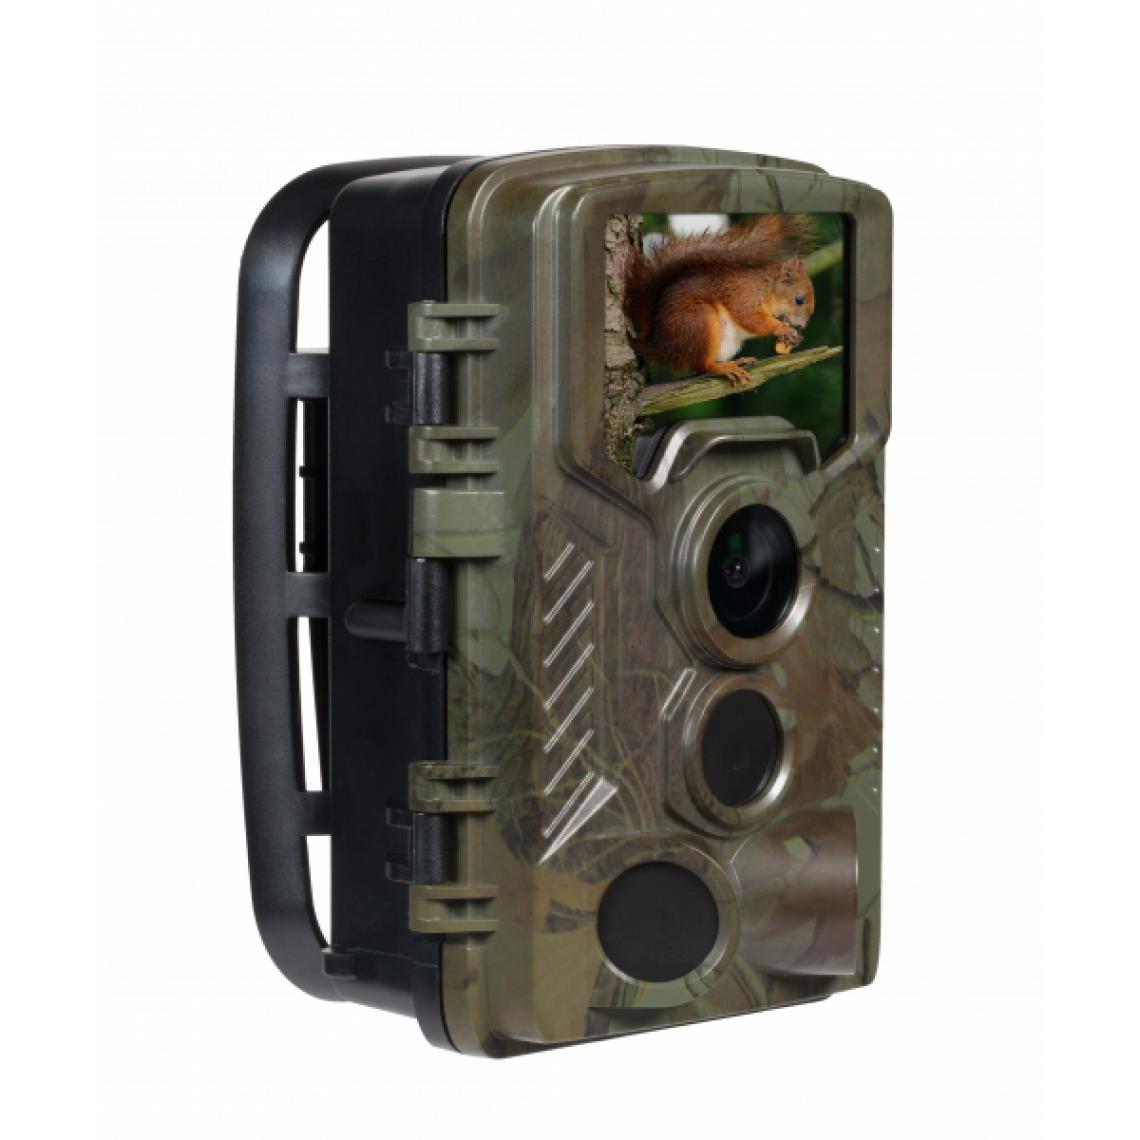 Technaxx - Caméra de surveillance intérieur extérieurTechnaxx Nature Wild Cam TX-125 8MP - Caméra de surveillance connectée